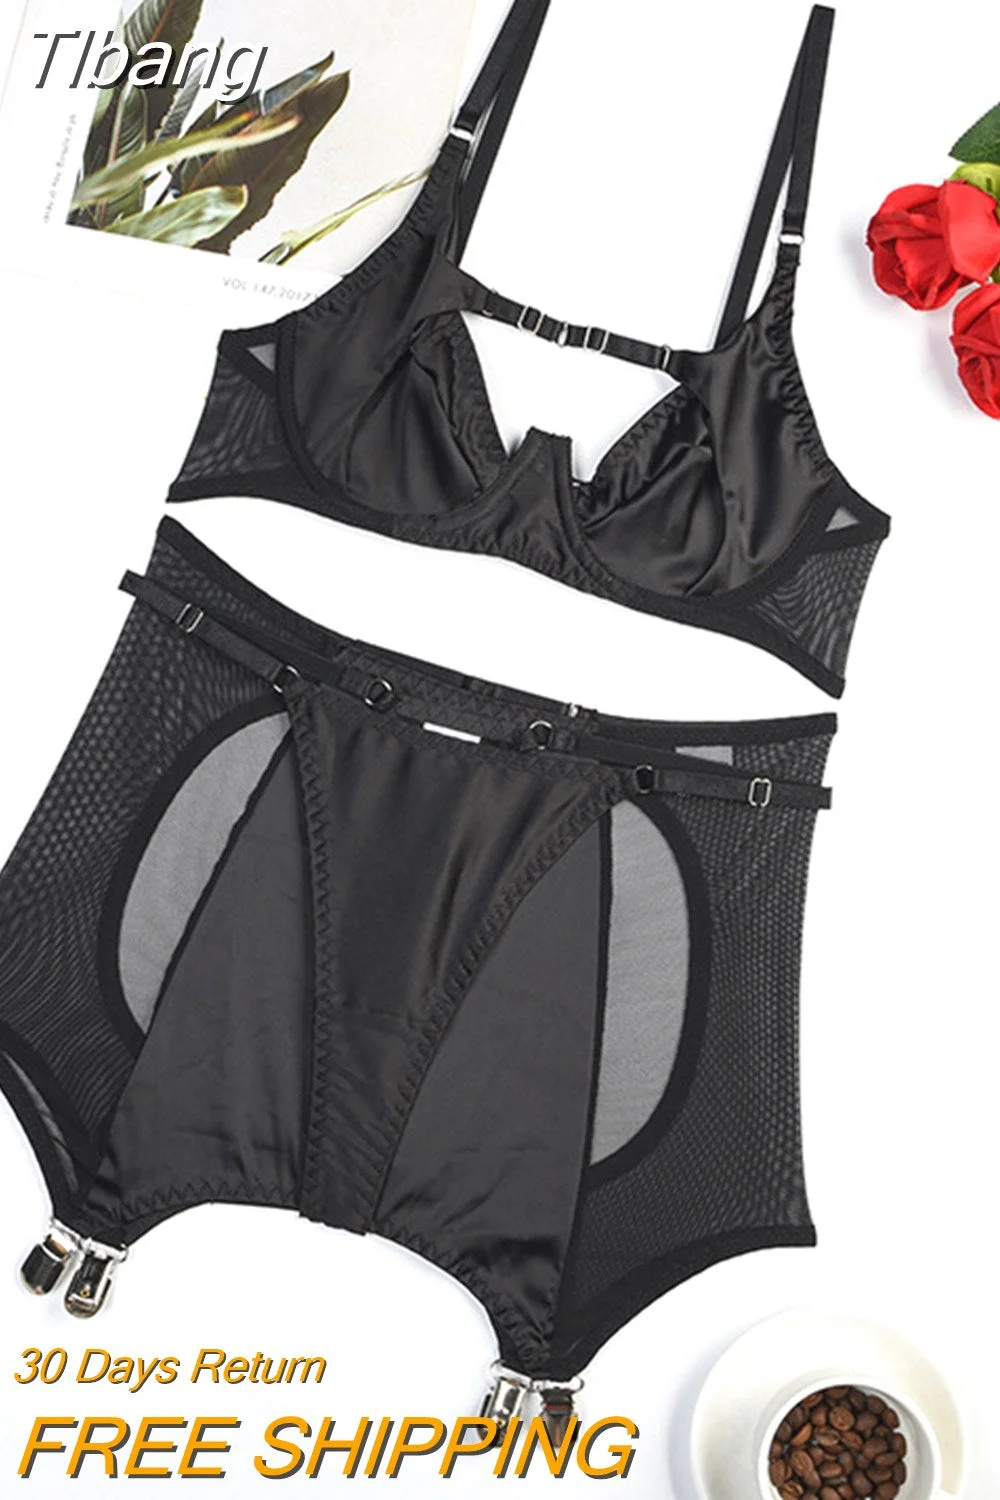 Tlbang Silk Underwear Lingerie Sexy Crotchless Garter 3-Piece Bra Kit Push Up Bilizna Set Fine Setup Outfit Sensual Intimate